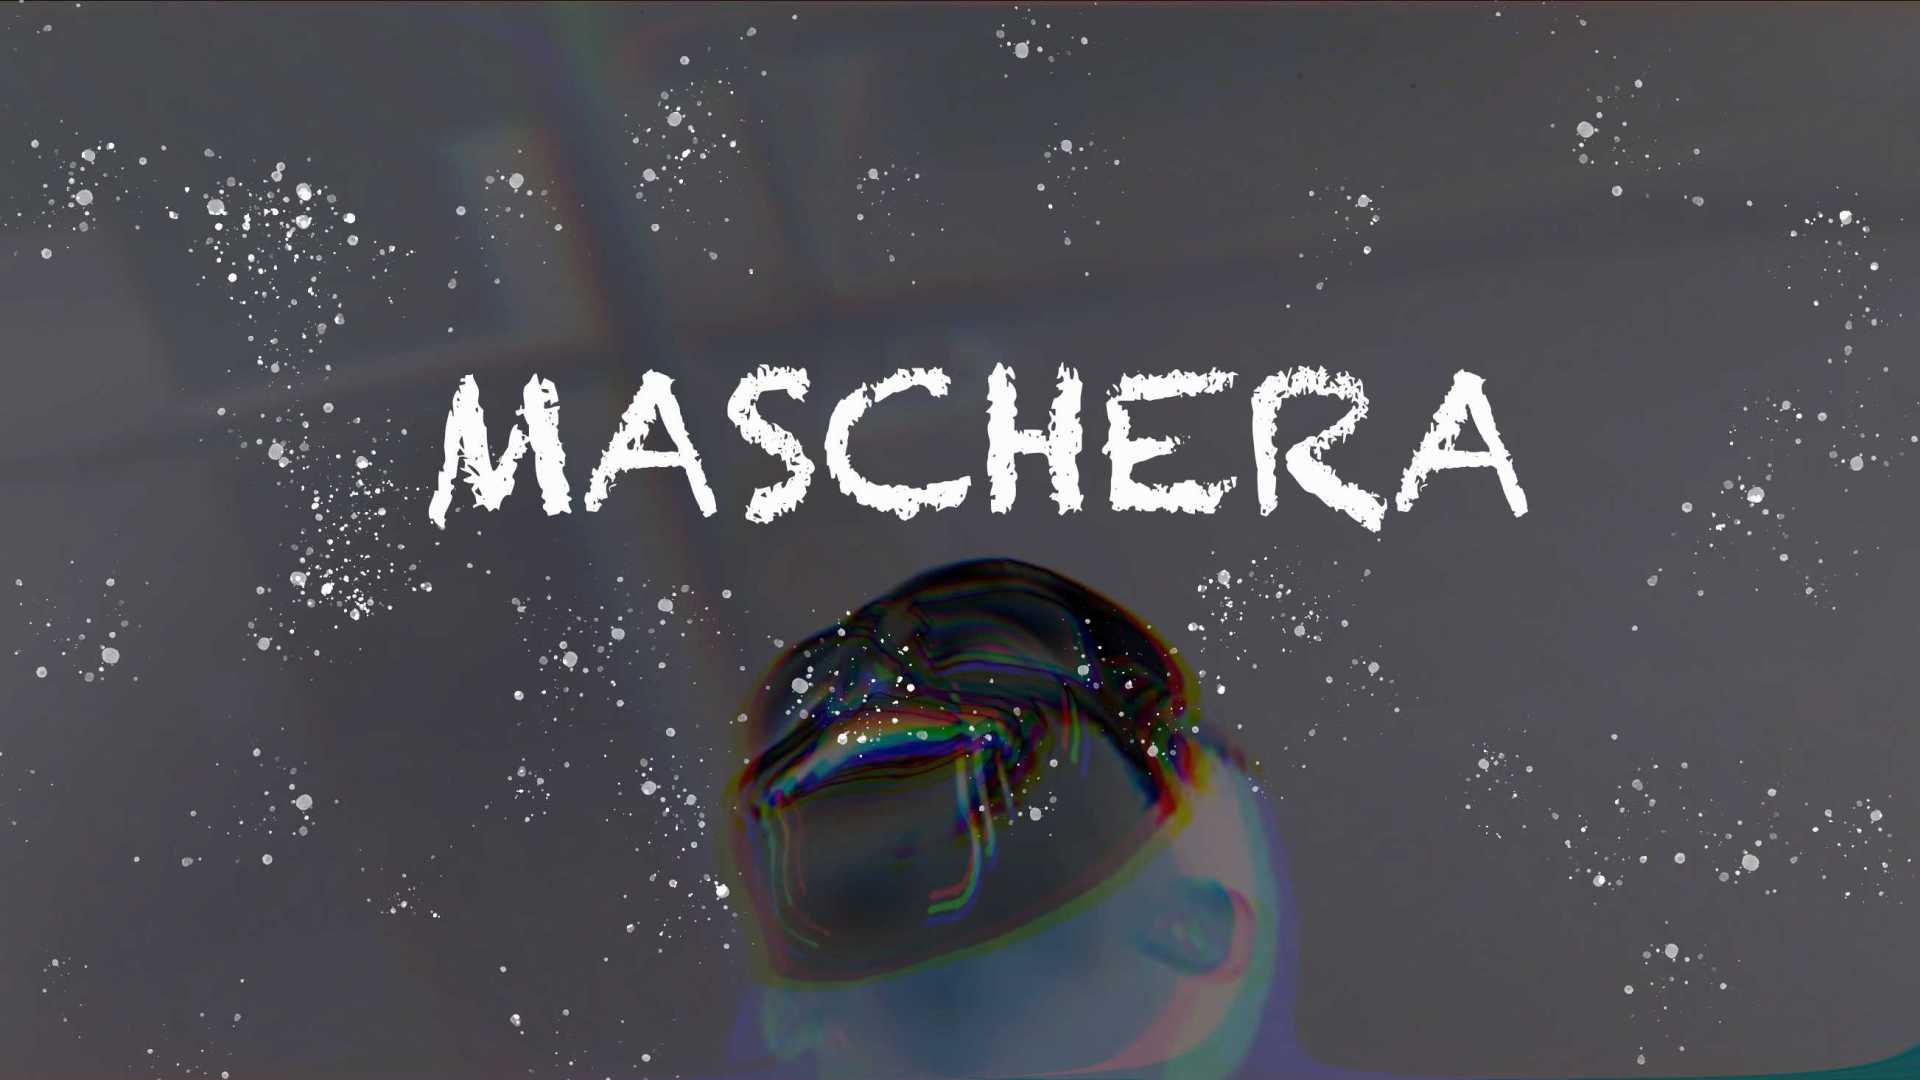 The Maschera